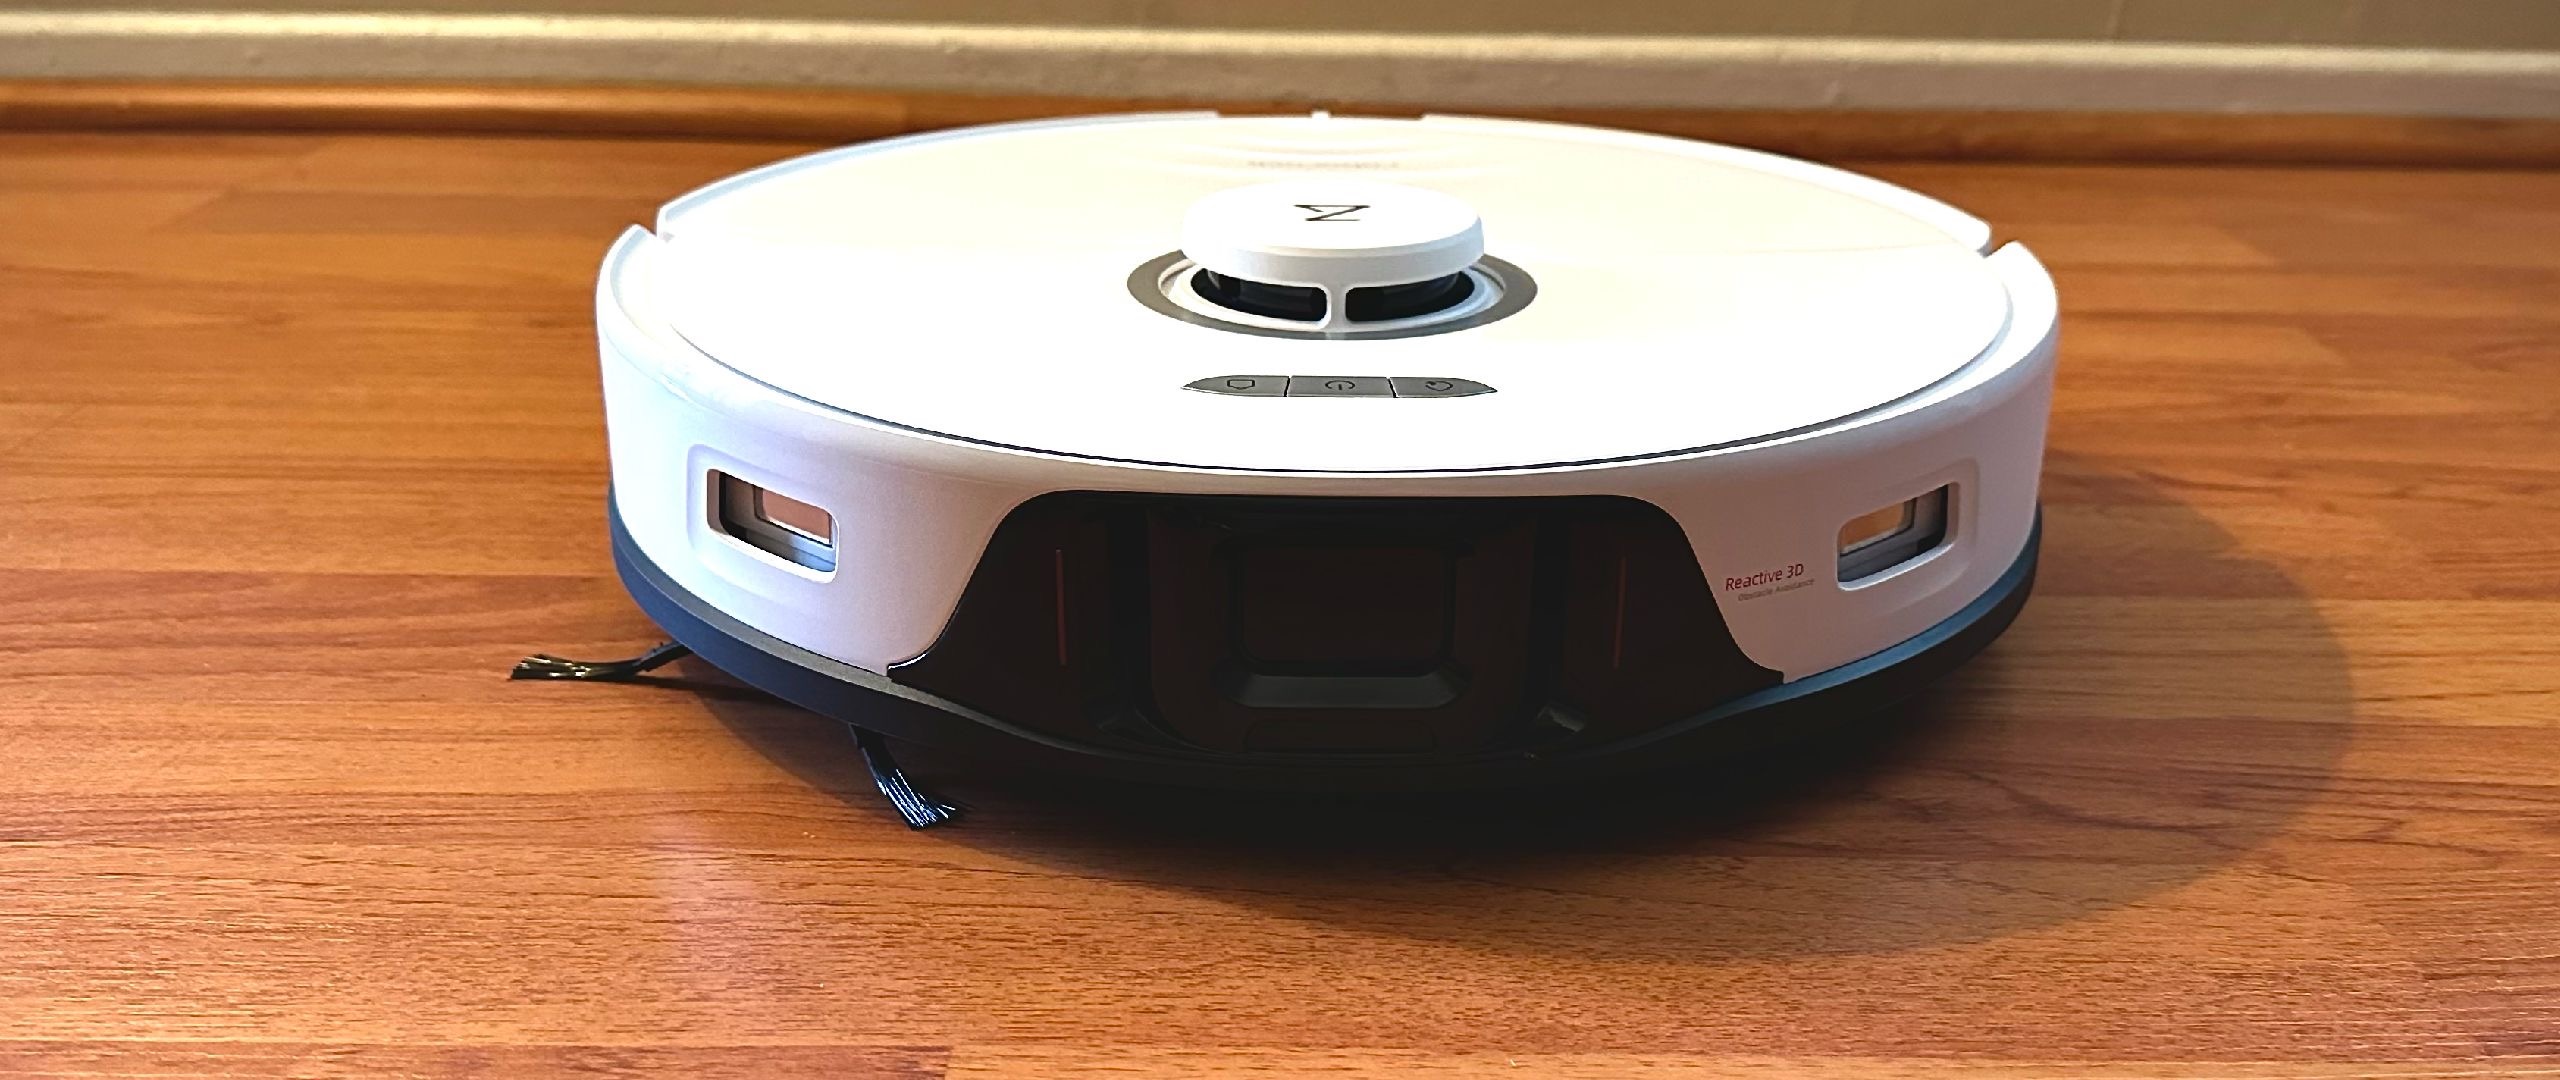 Roborock S8 Pro Ultra robot vacuum review - Reviewed